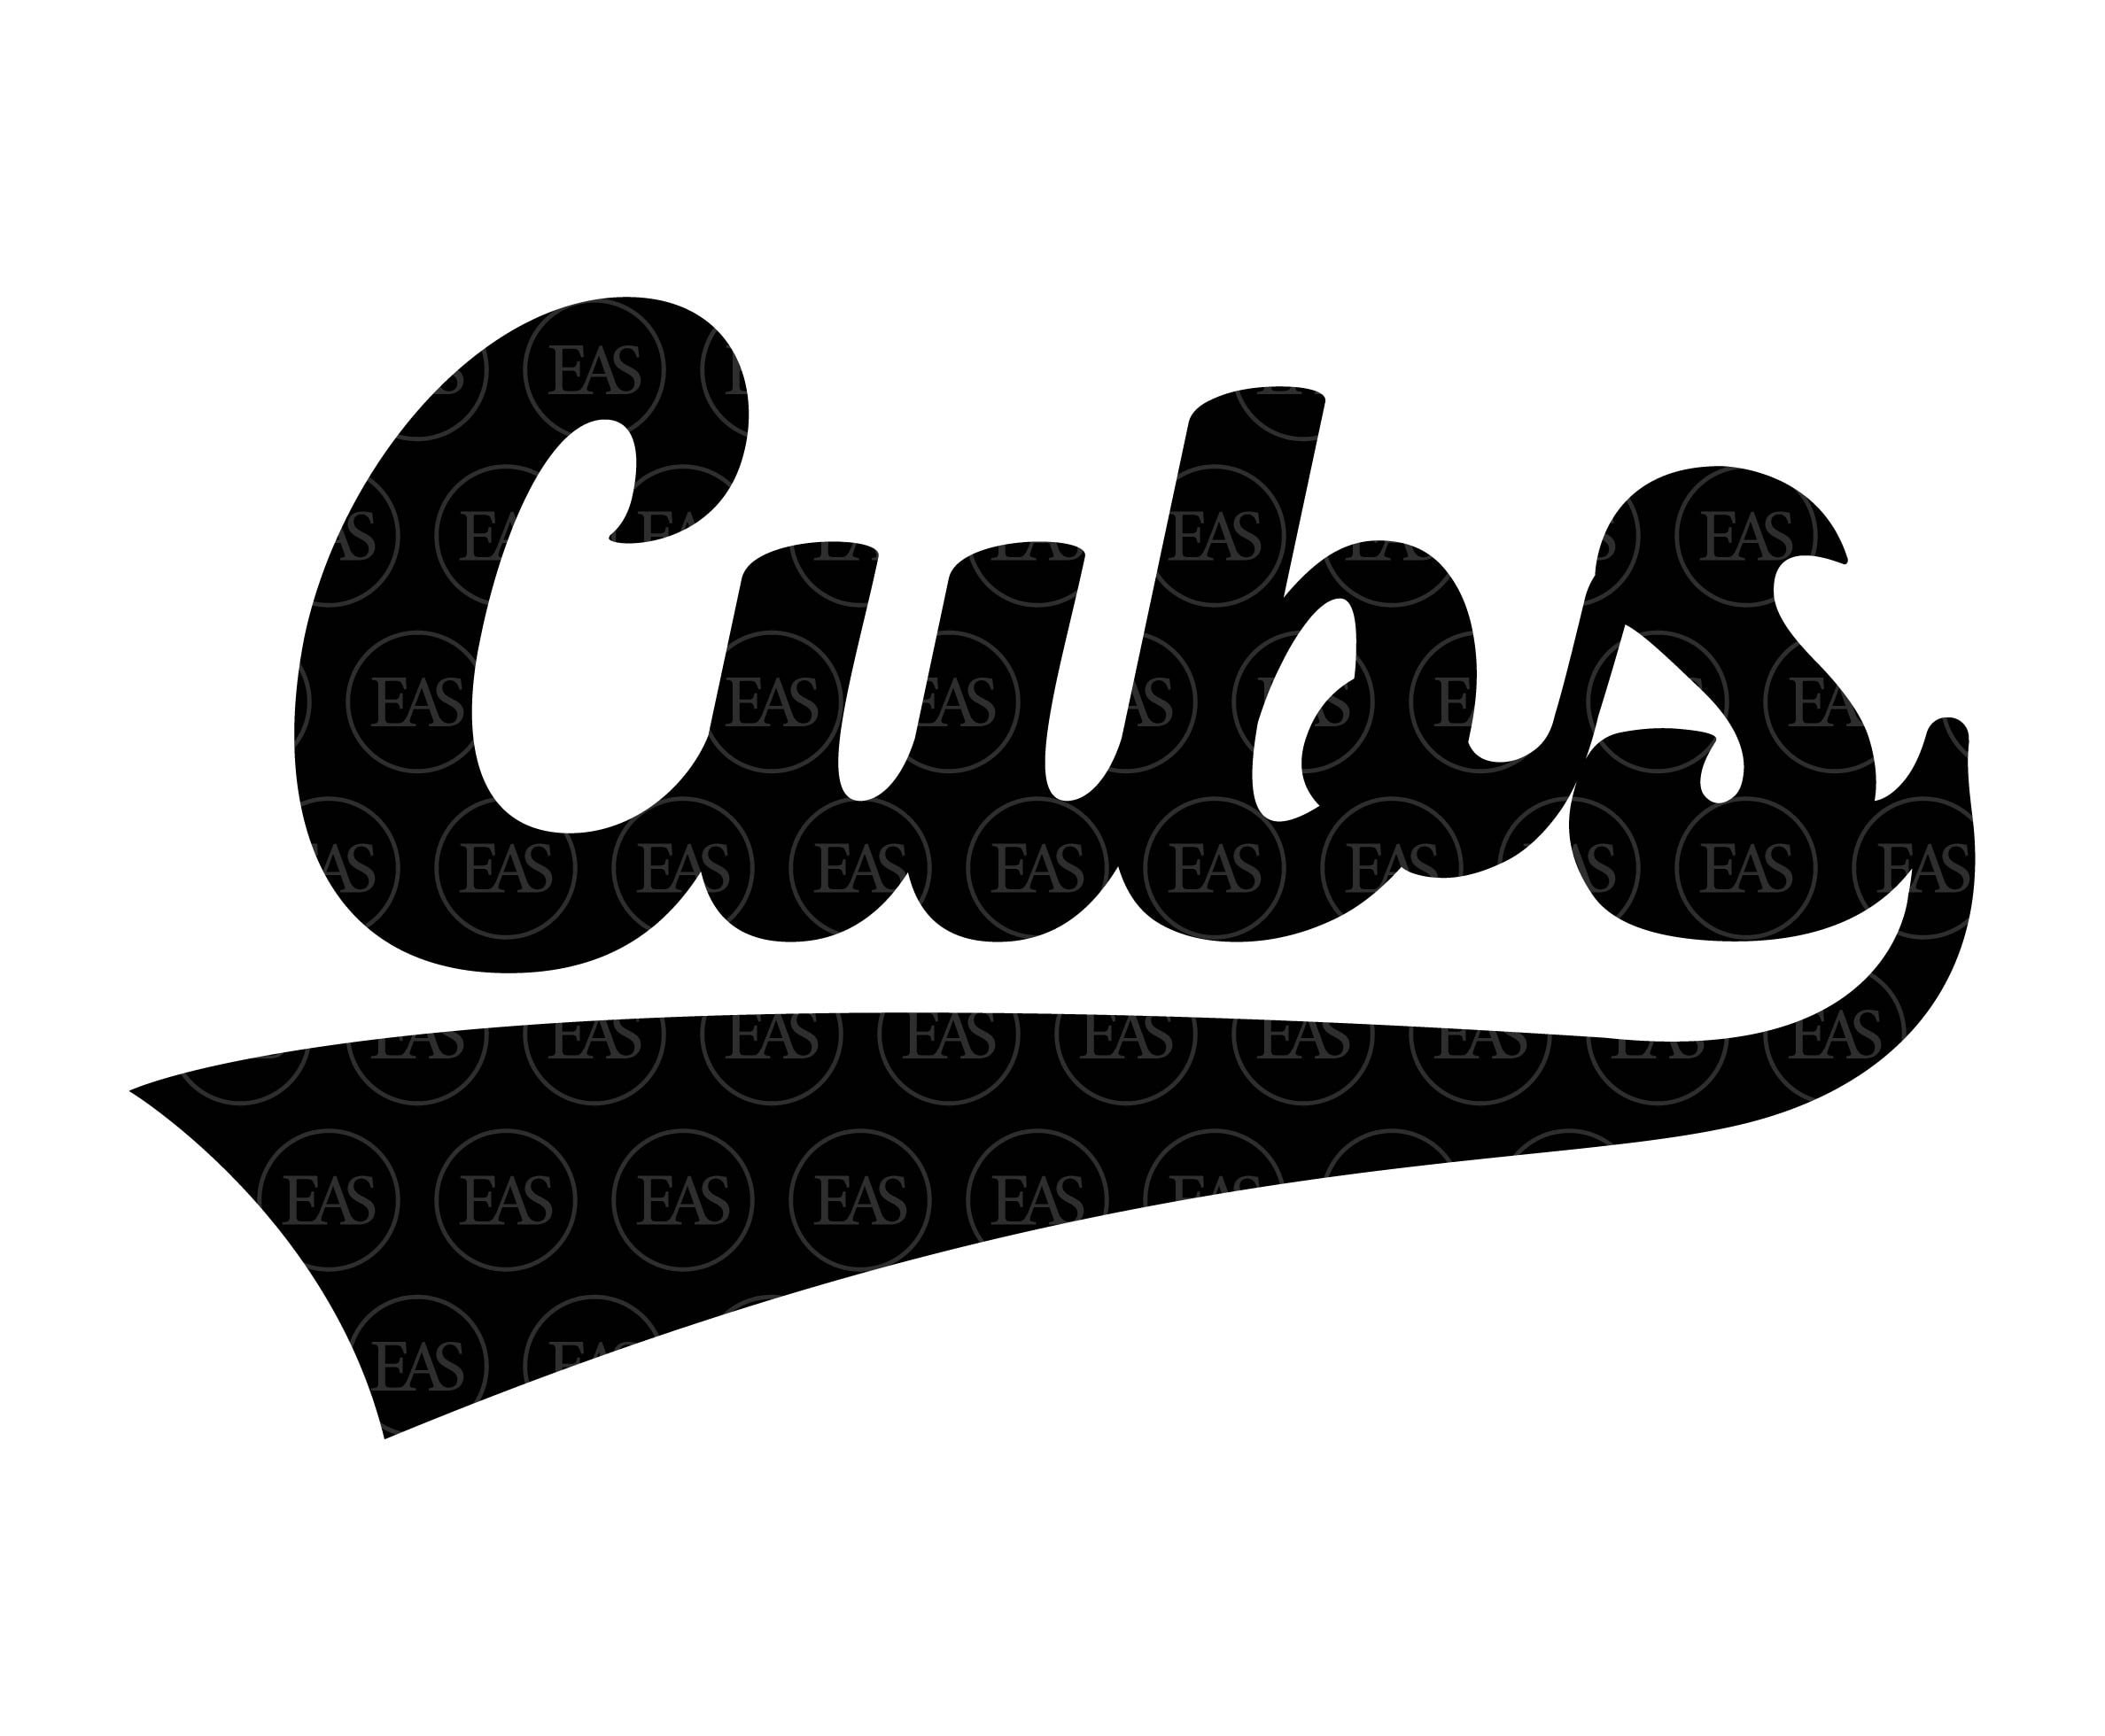 Chicago Cubs N. Jonas Jersey Baseball Shirt Gray Custom Number And Name -  Banantees